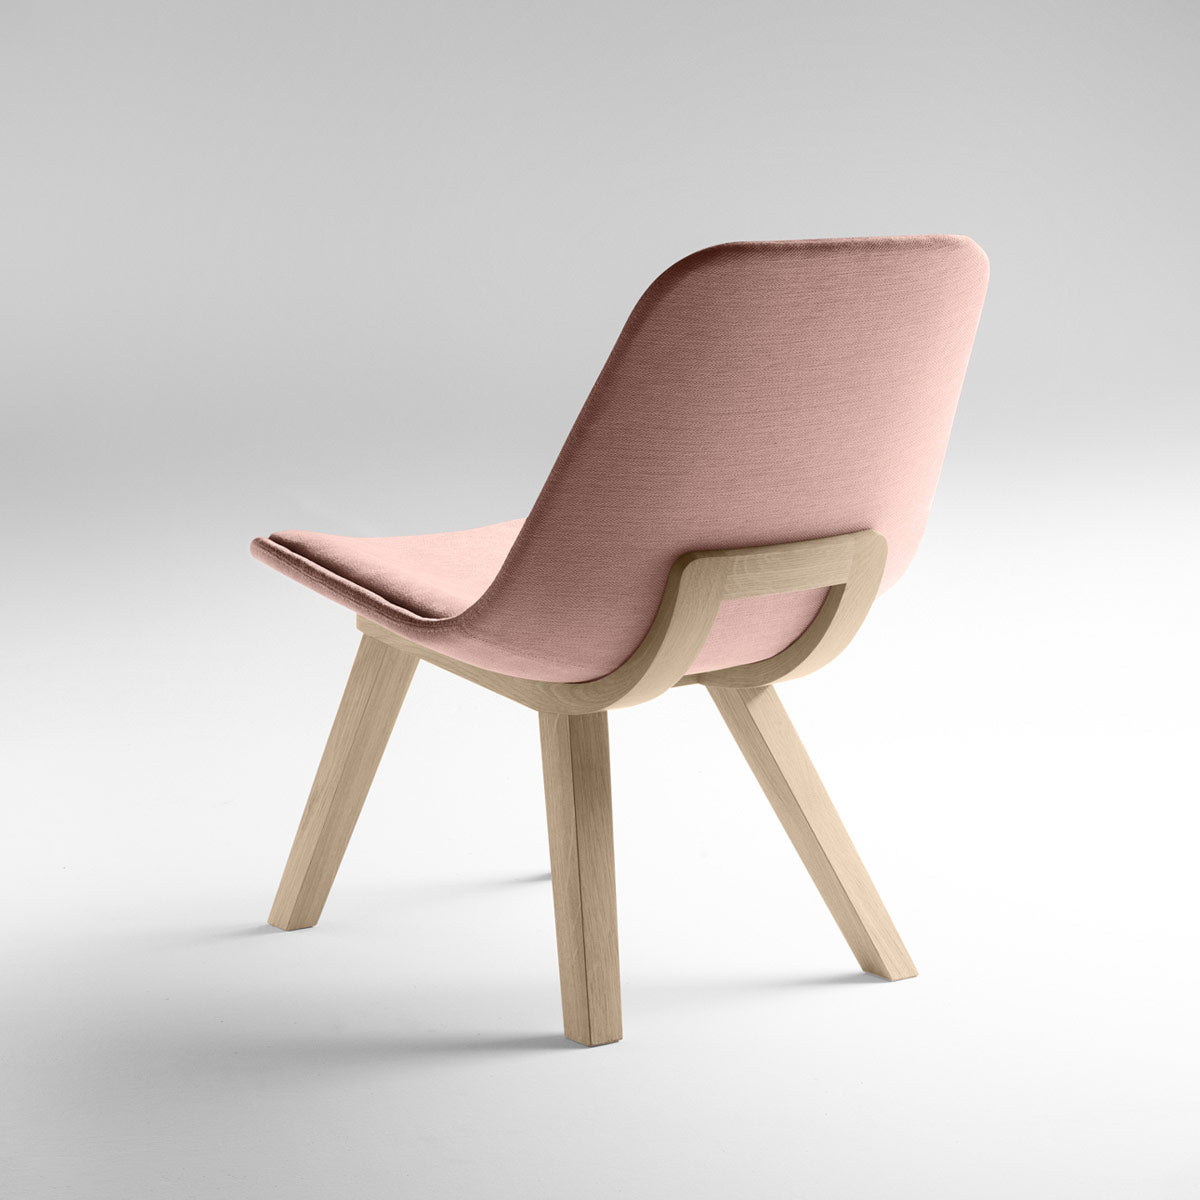 Kuskoa Lounge Chair